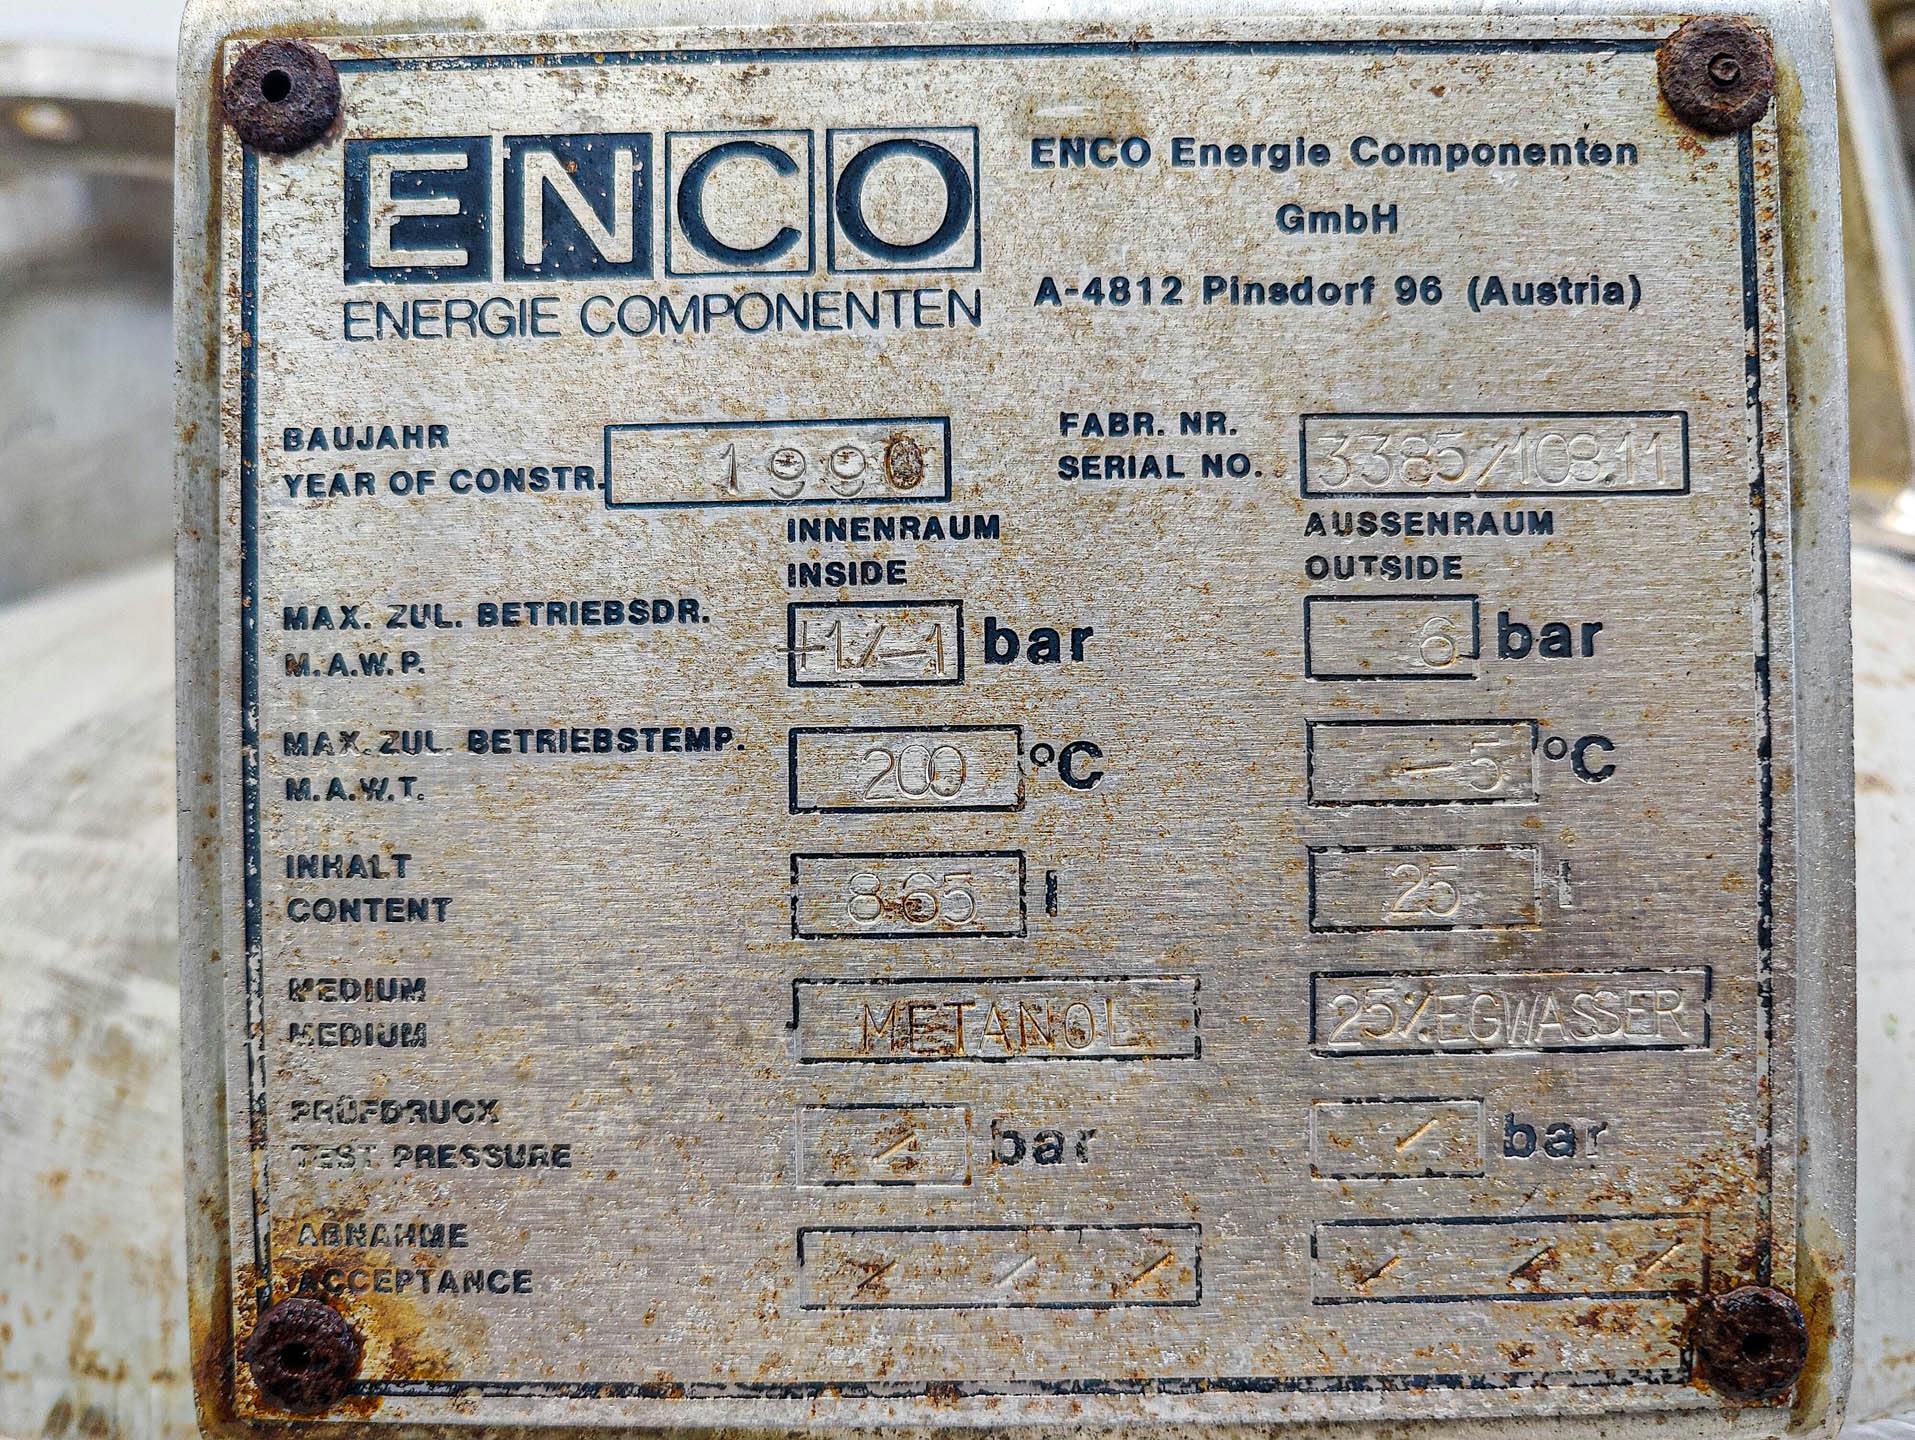 Enco 865 Ltr. - Recipiente de pressão - image 8